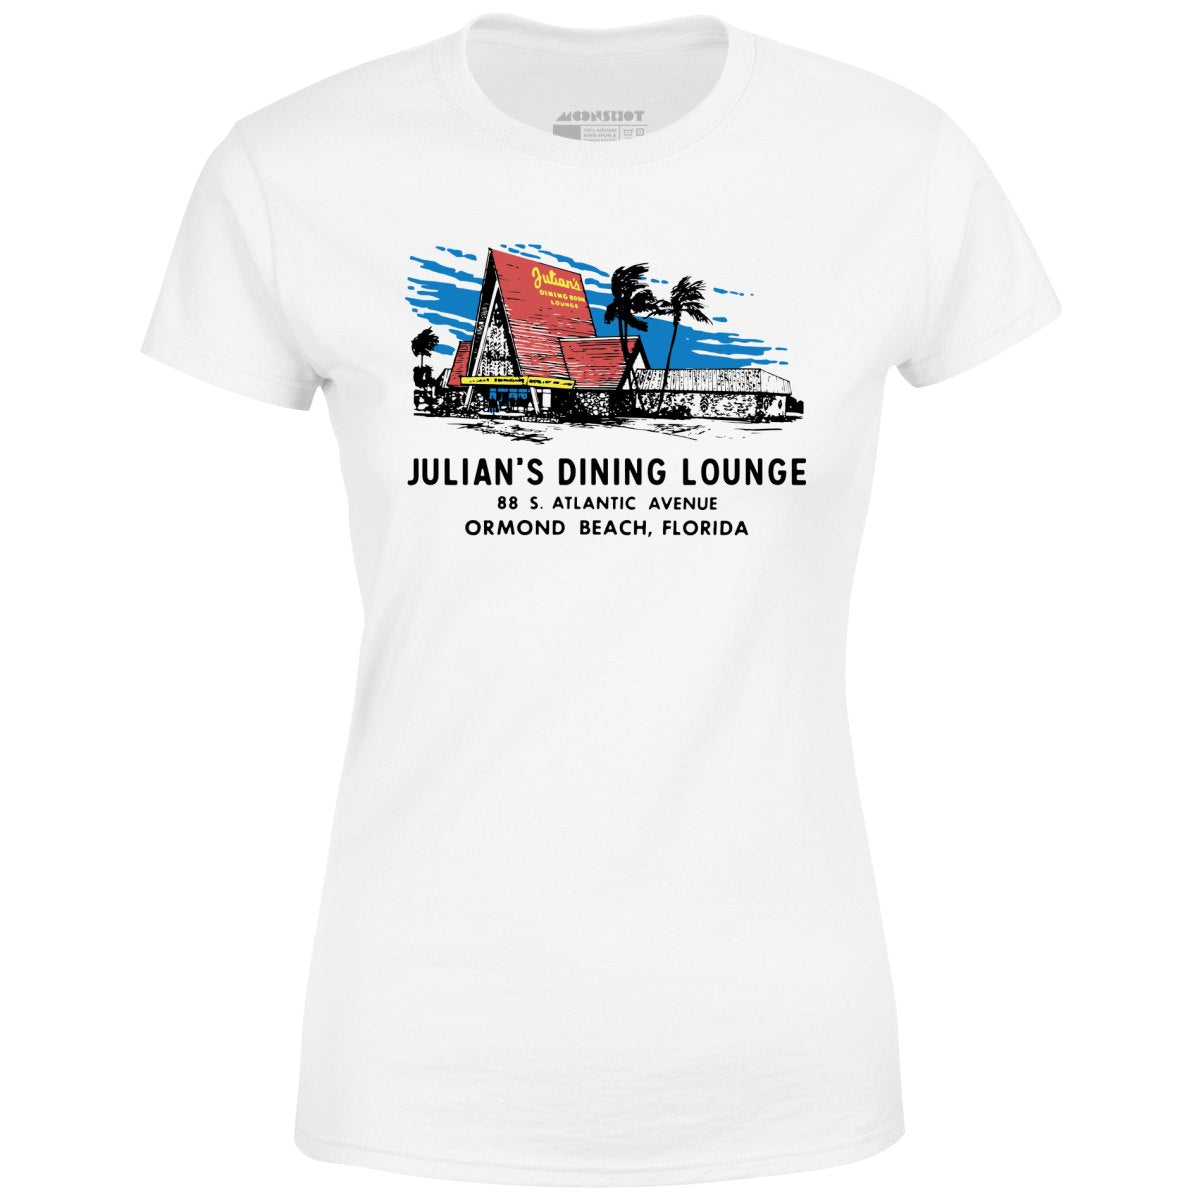 Julian's Dining Lounge - Ormond Beach, FL - Vintage Restaurant - Women's T-Shirt